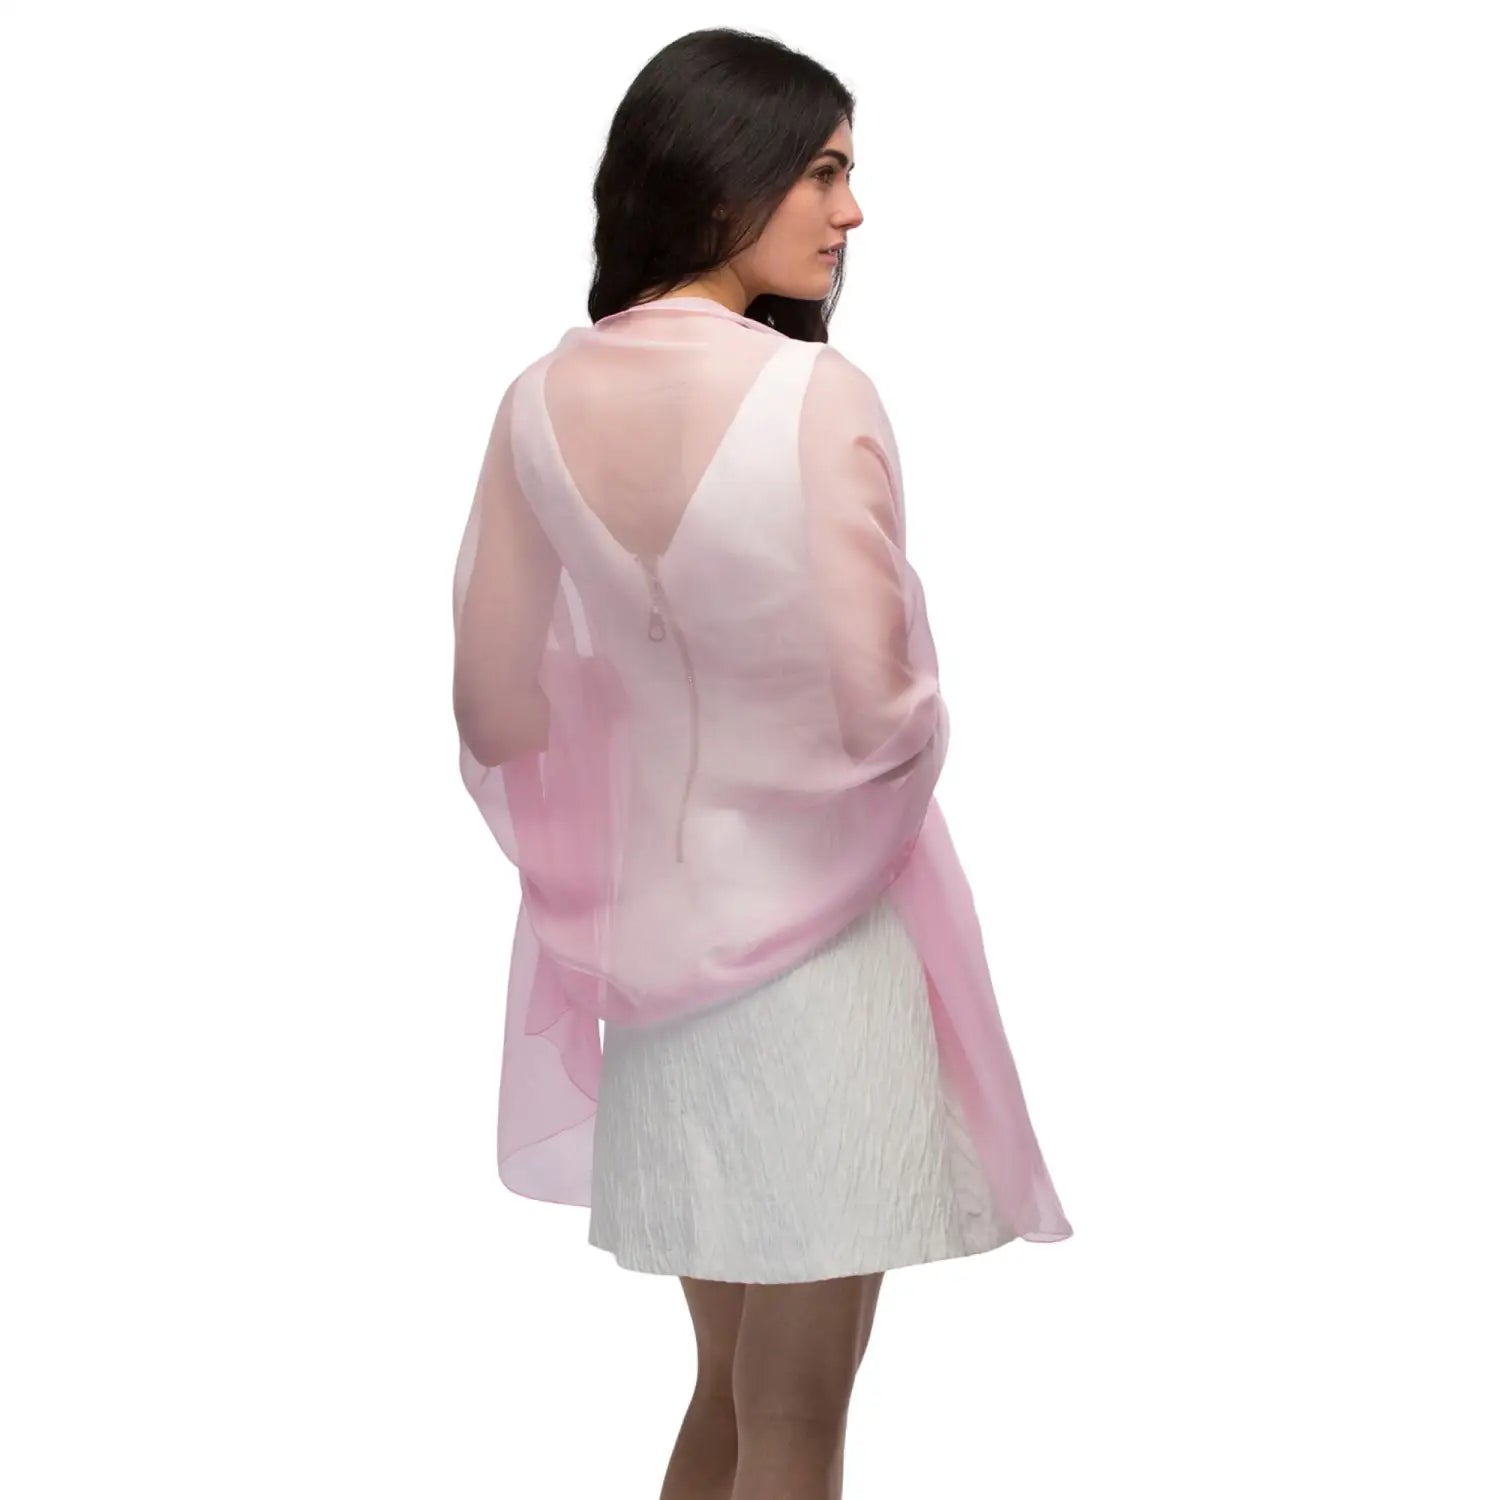 Woman in pink chiffon shawl and skirt, Plain Chiffon Shawl Semi-Opaque - Versatile Scarf